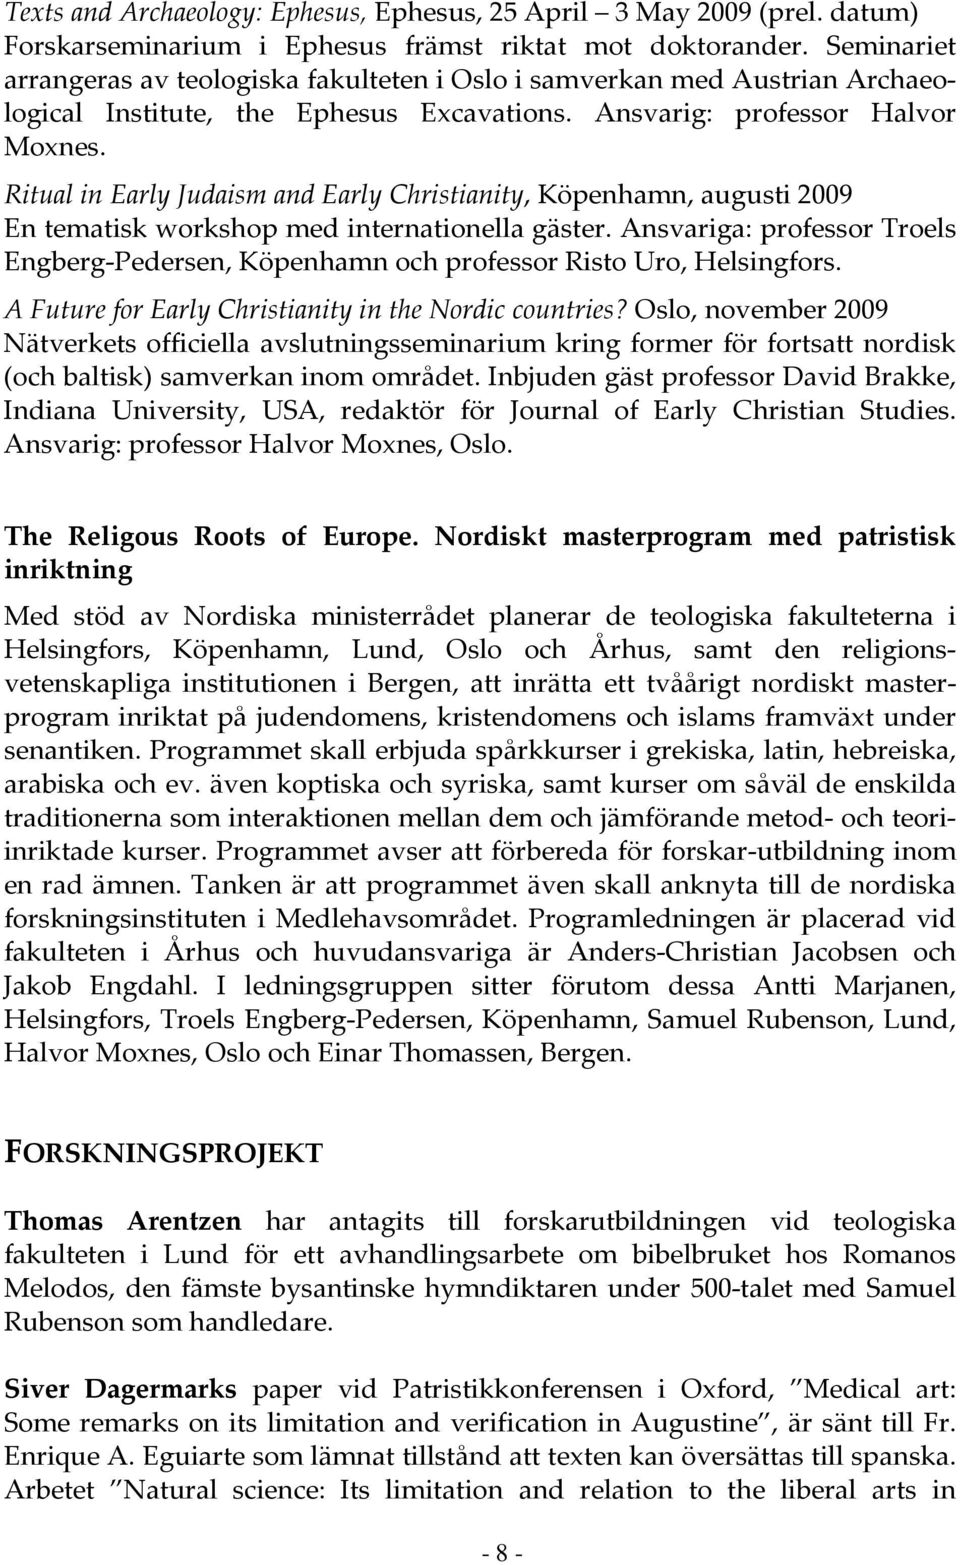 Ritual in Early Judaism and Early Christianity, Köpenhamn, augusti 2009 En tematisk workshop med internationella gäster.